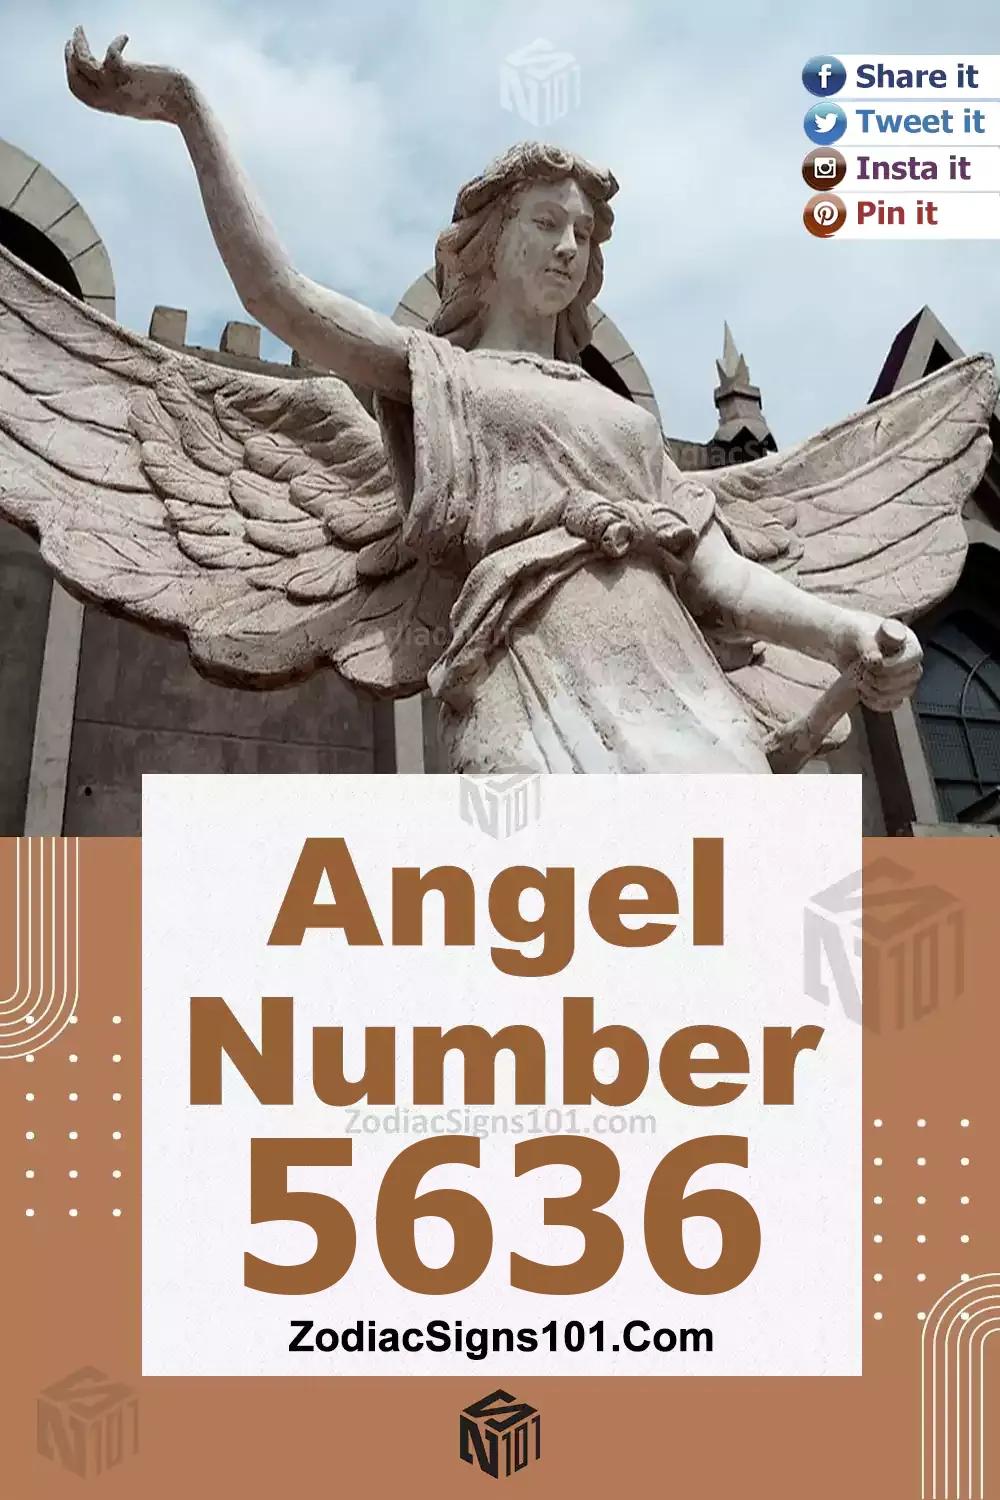 5636-Angel-Number-Meaning.jpg